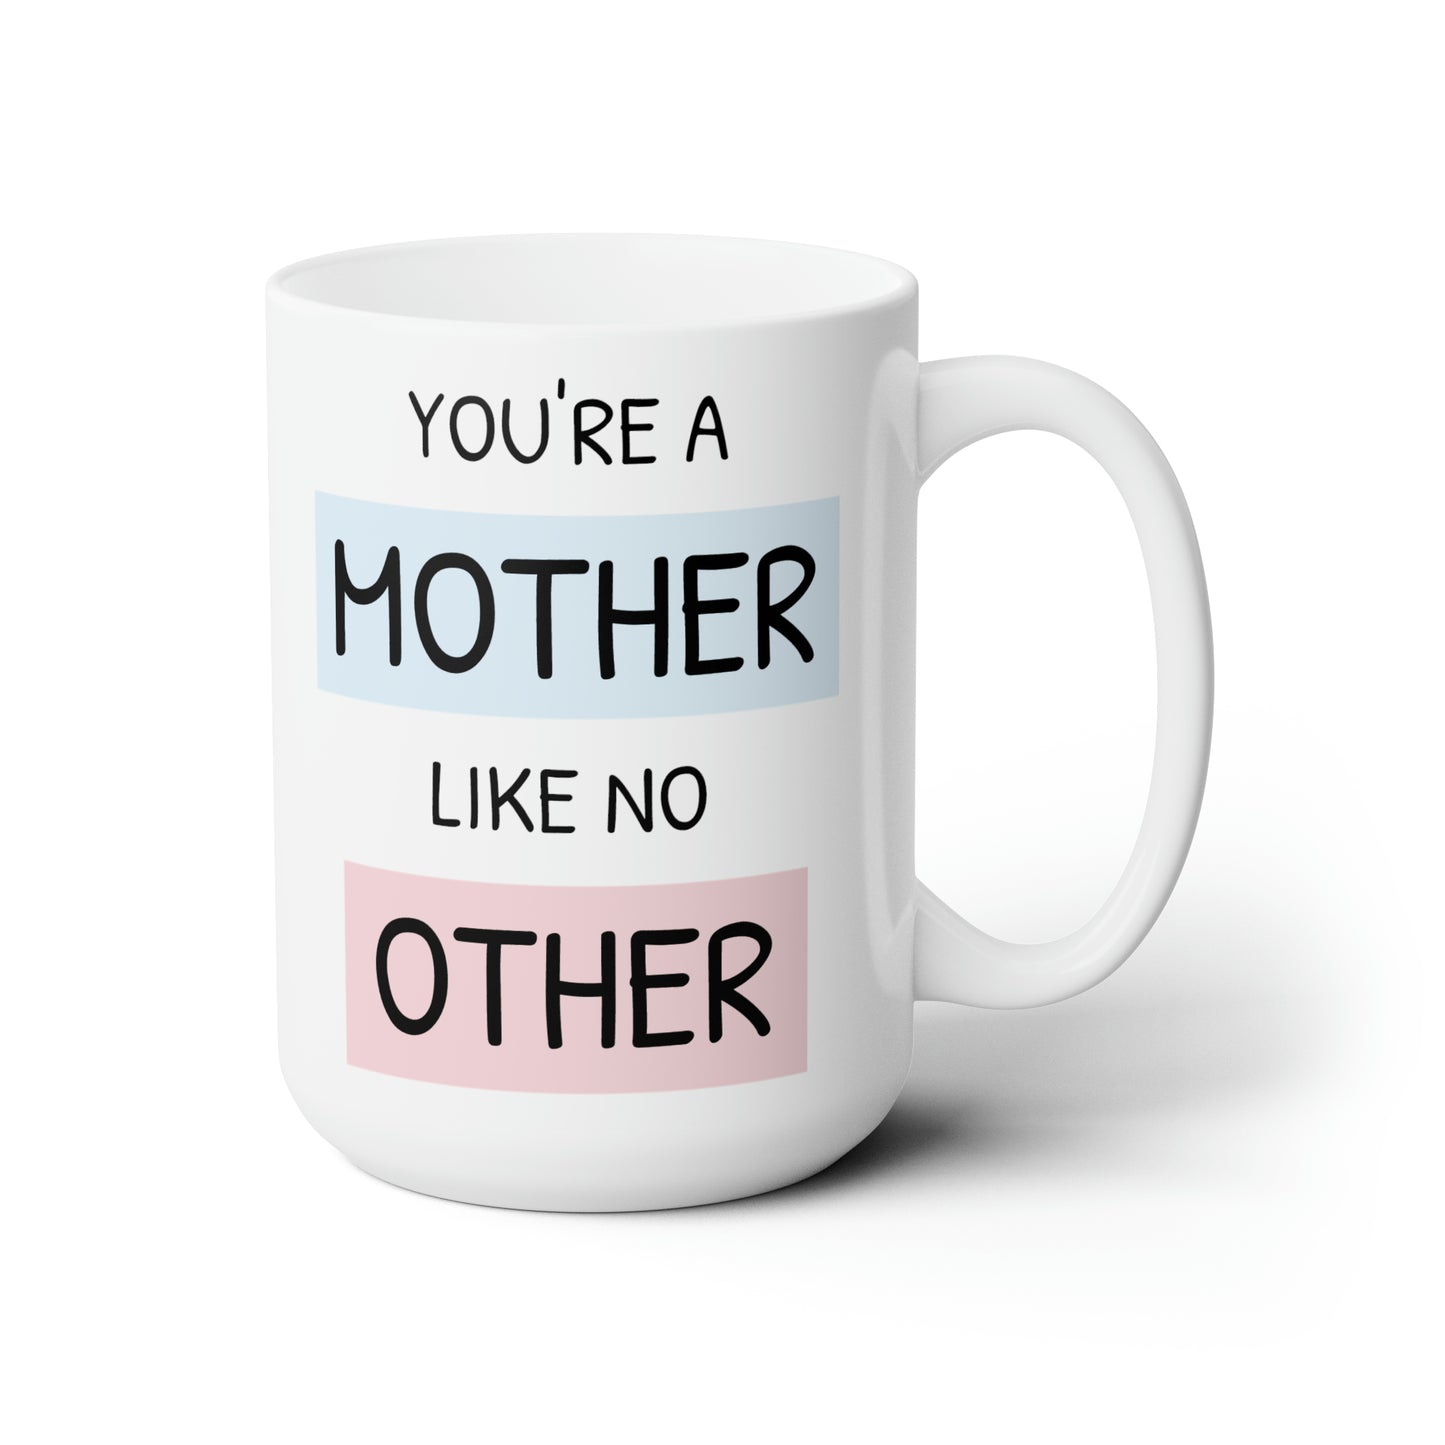 A Mother Like No Other Mug